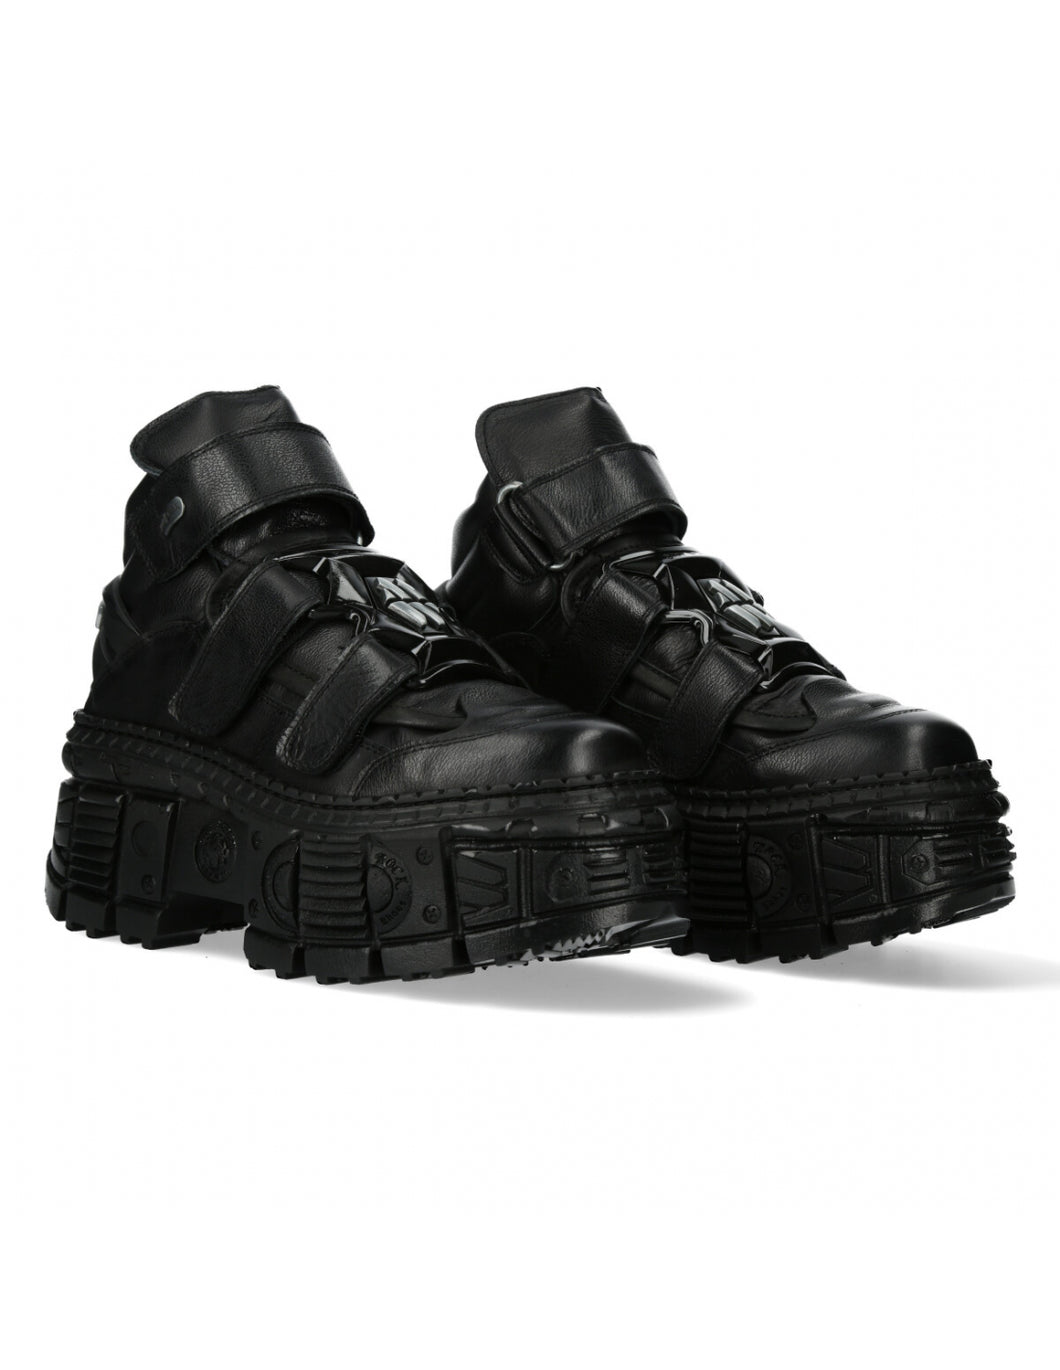 New Rock Shoes Boots Designer Platform M-WALL285-S2